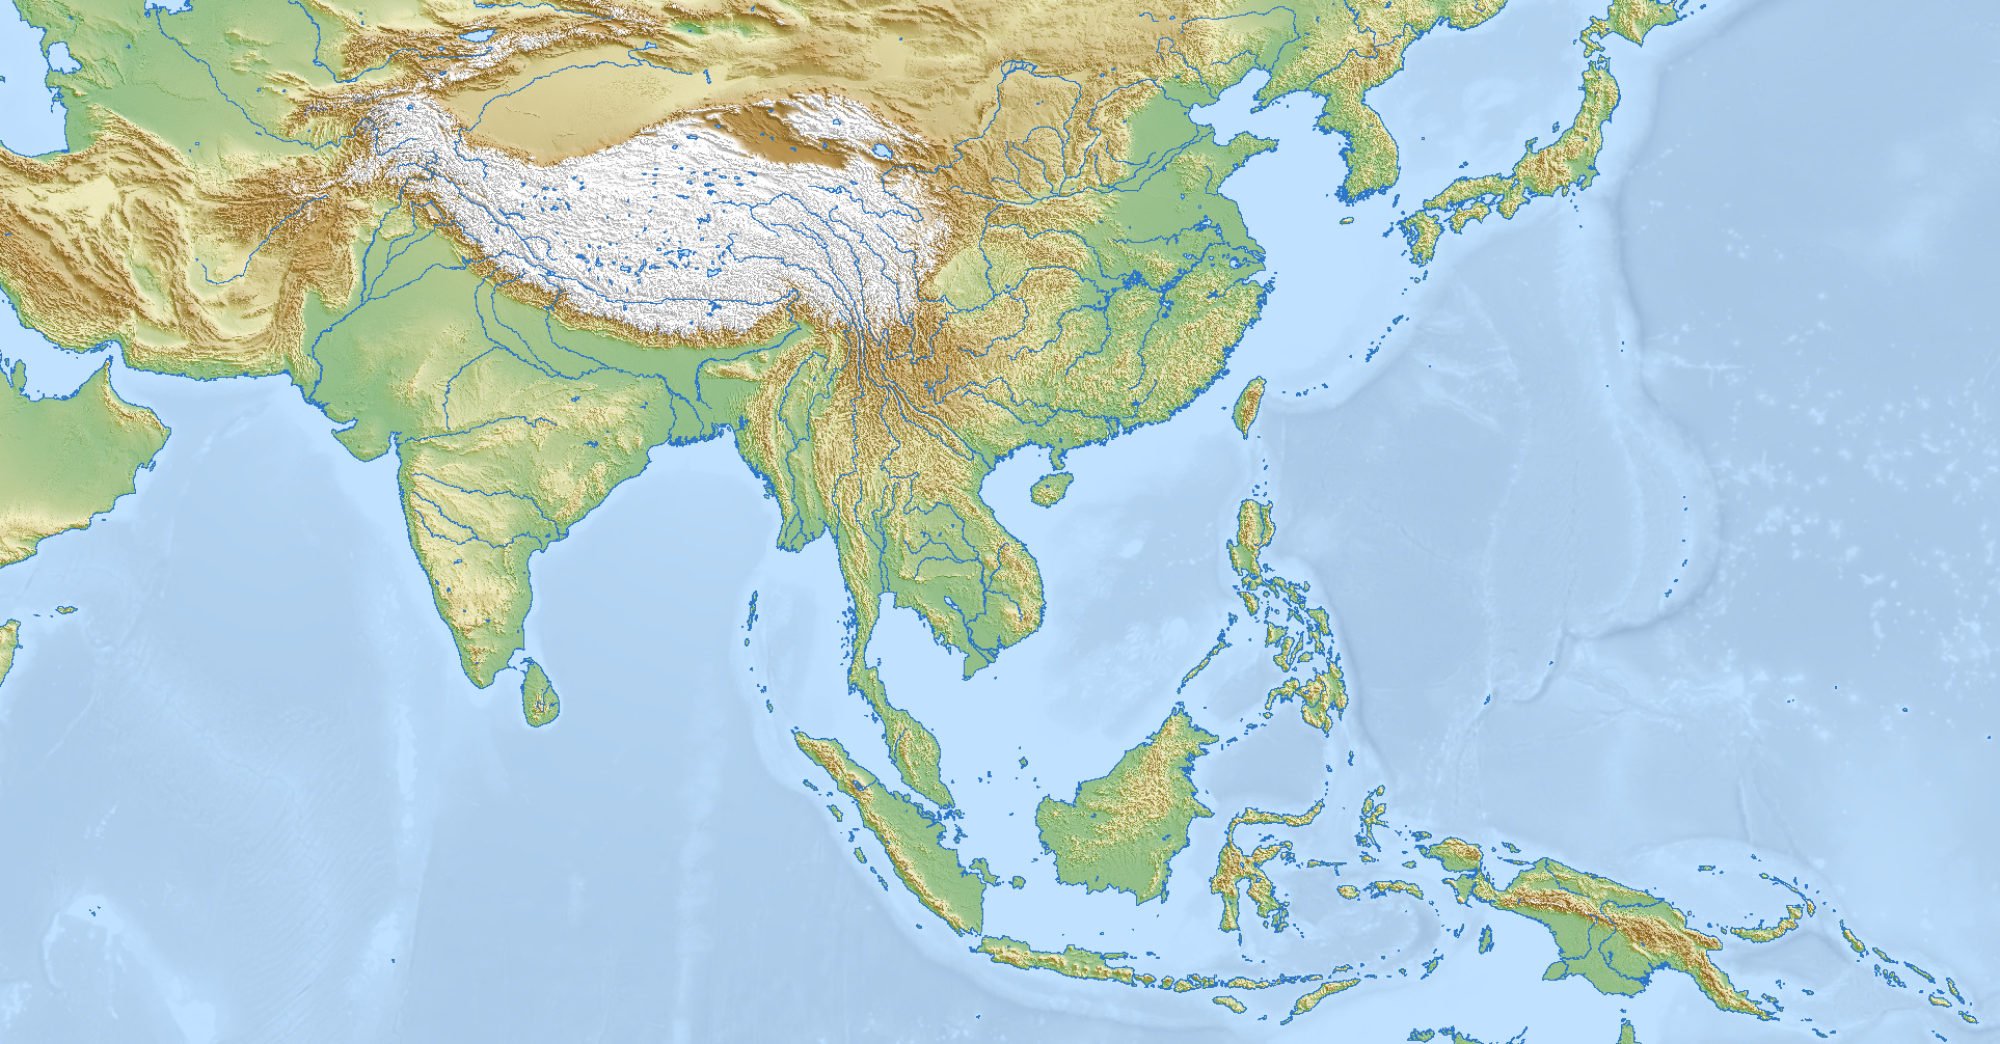 B c asia. Asia physical Map. Полуострова Азии. Физическая карта Азии. Полуострова Евразии.